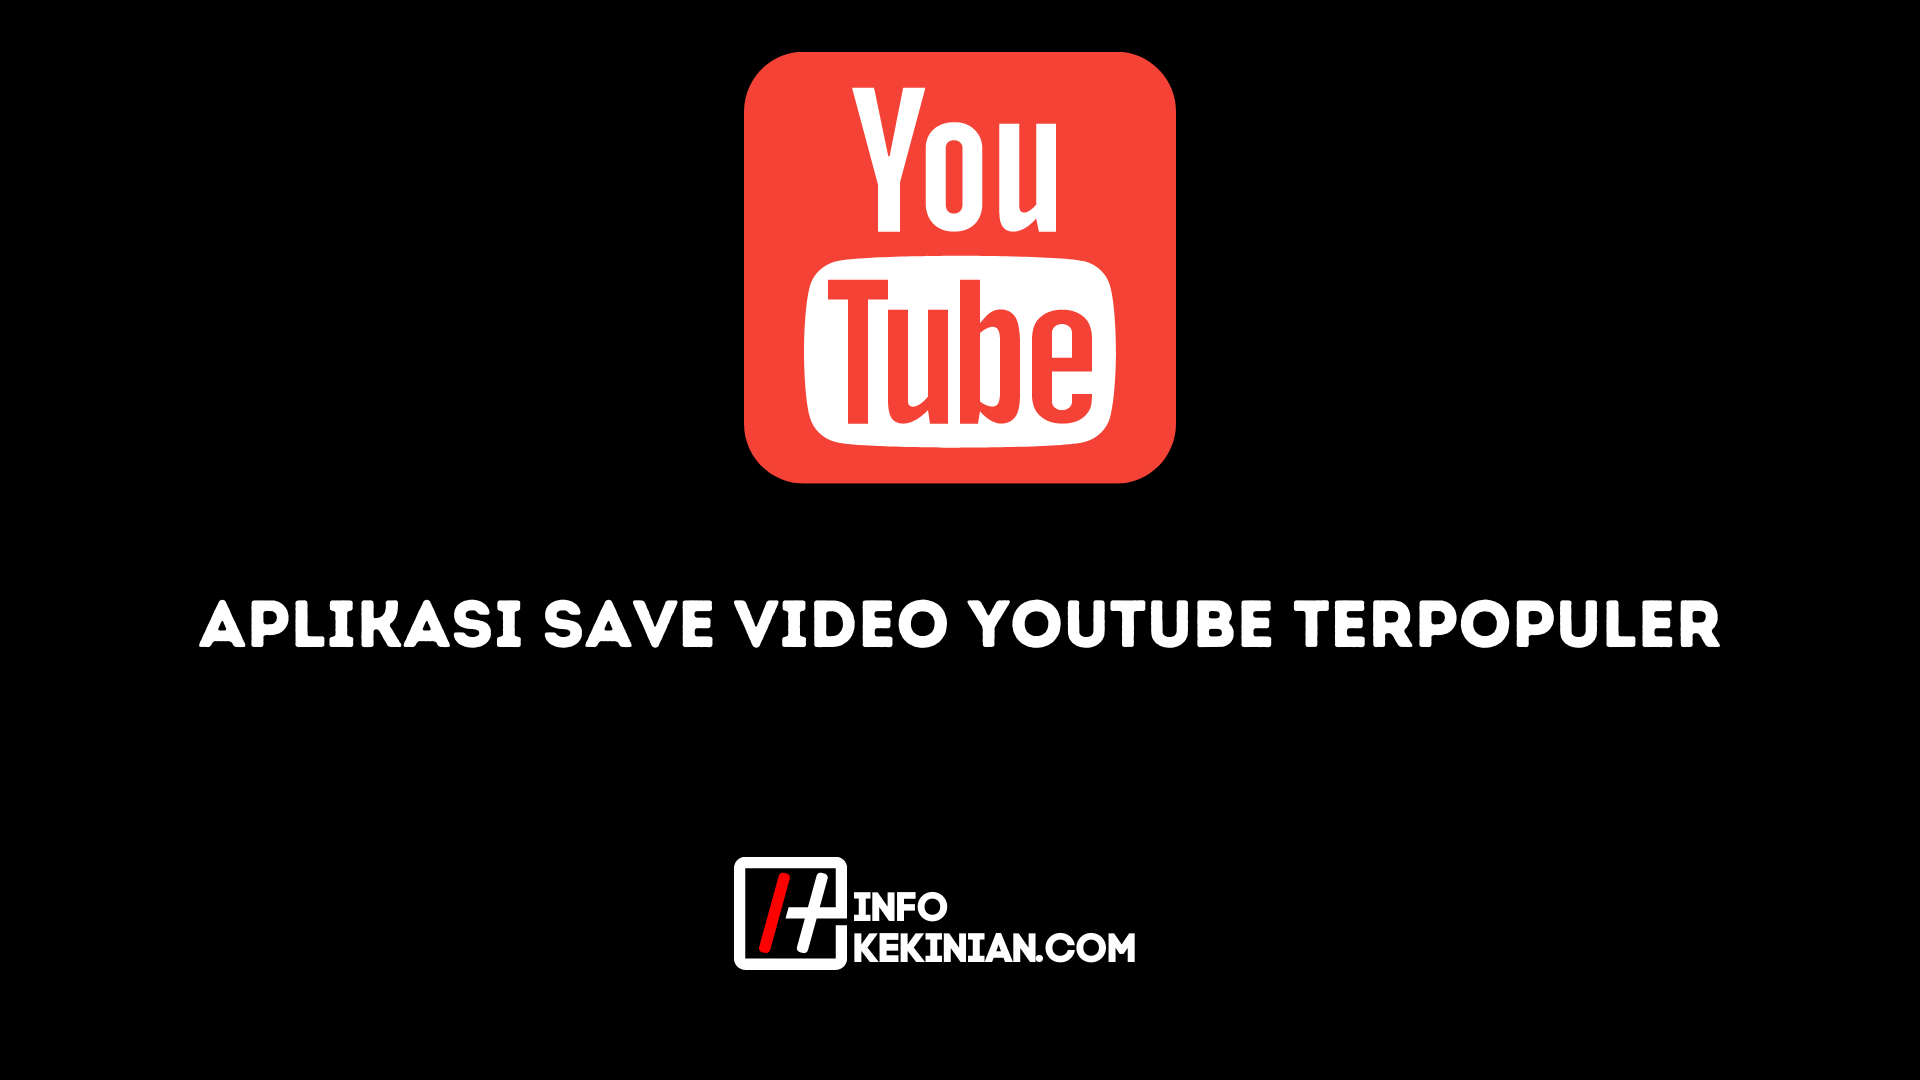 Save videos